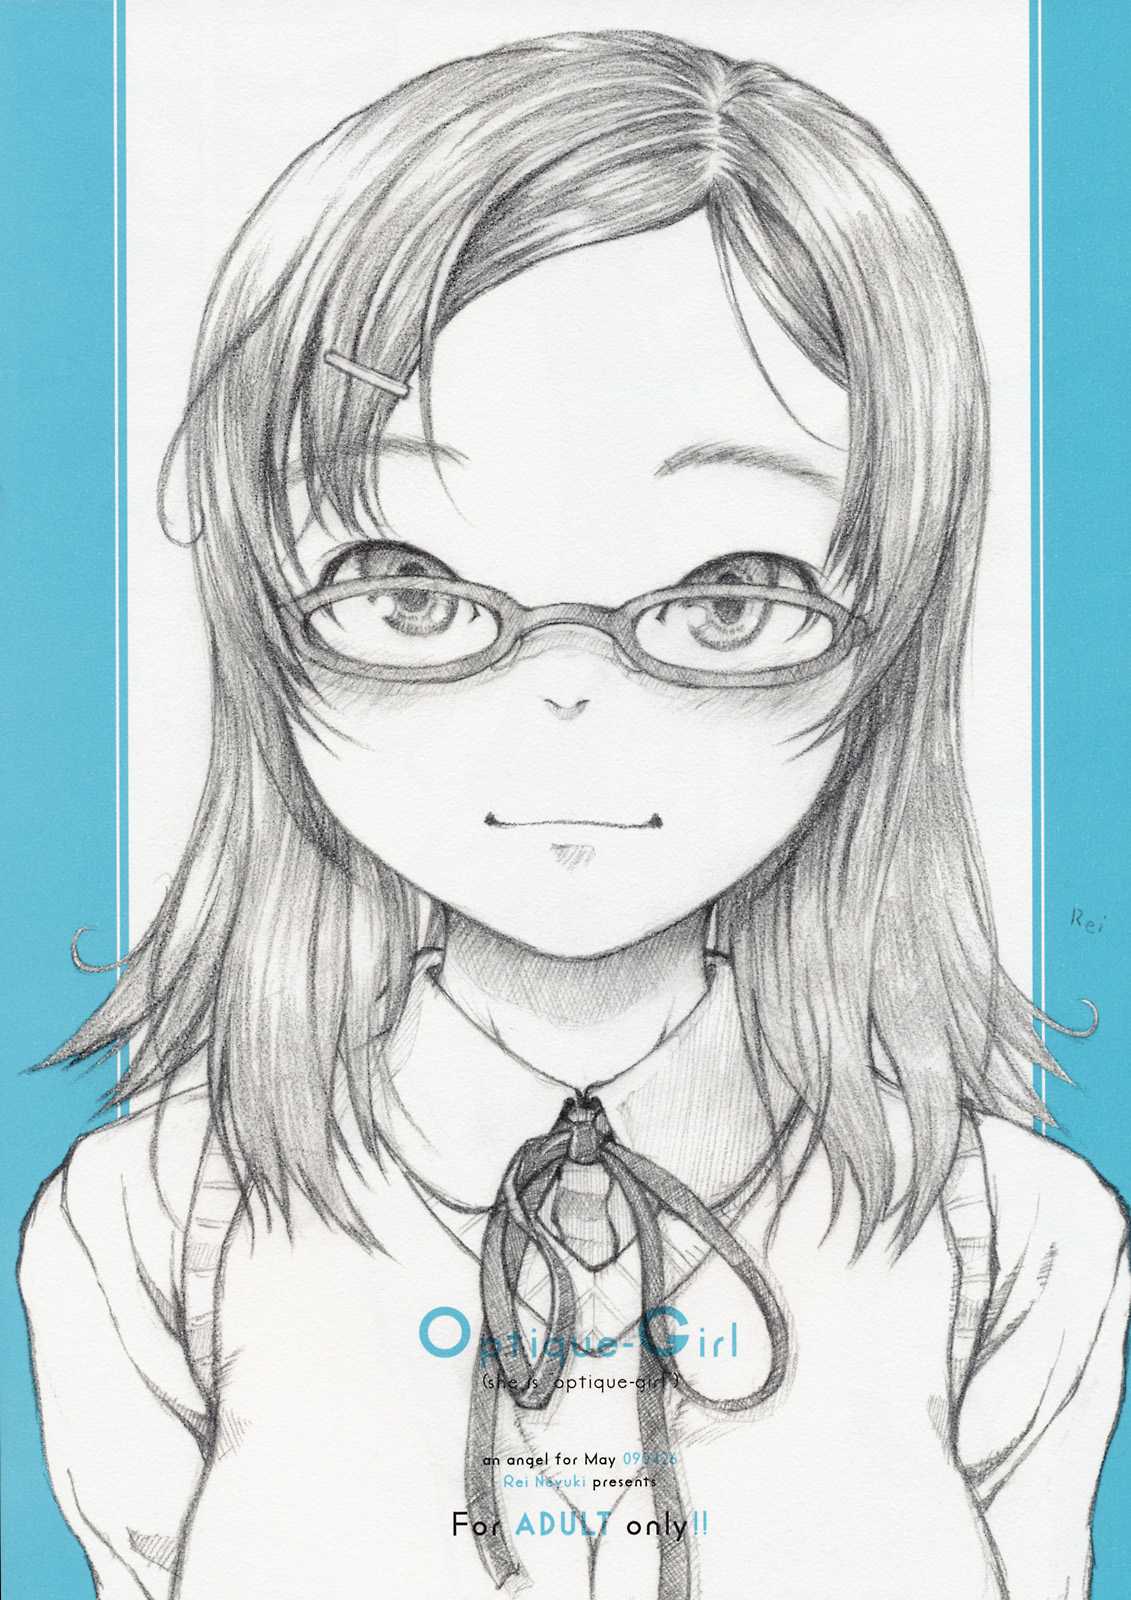 [May no Tenshi] Optique-Girl (original) (同人誌) [メイの天使] Optique-Girl (オリジナル)